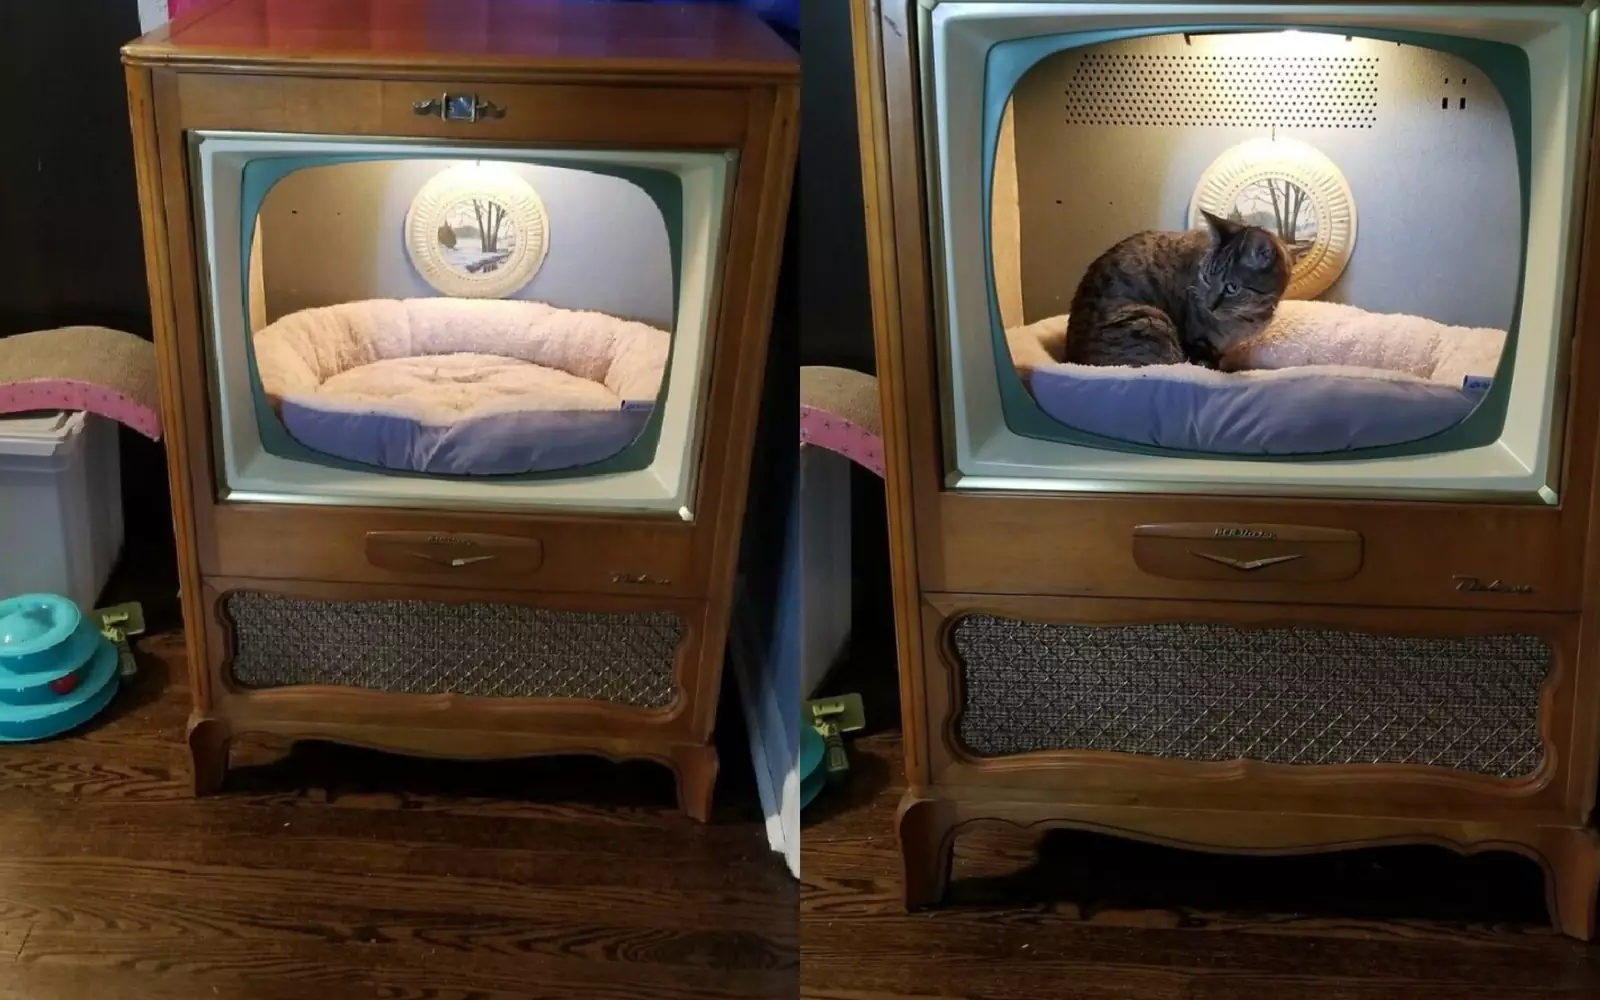 Мужчина превратил старый телевизор в домик для кошки.